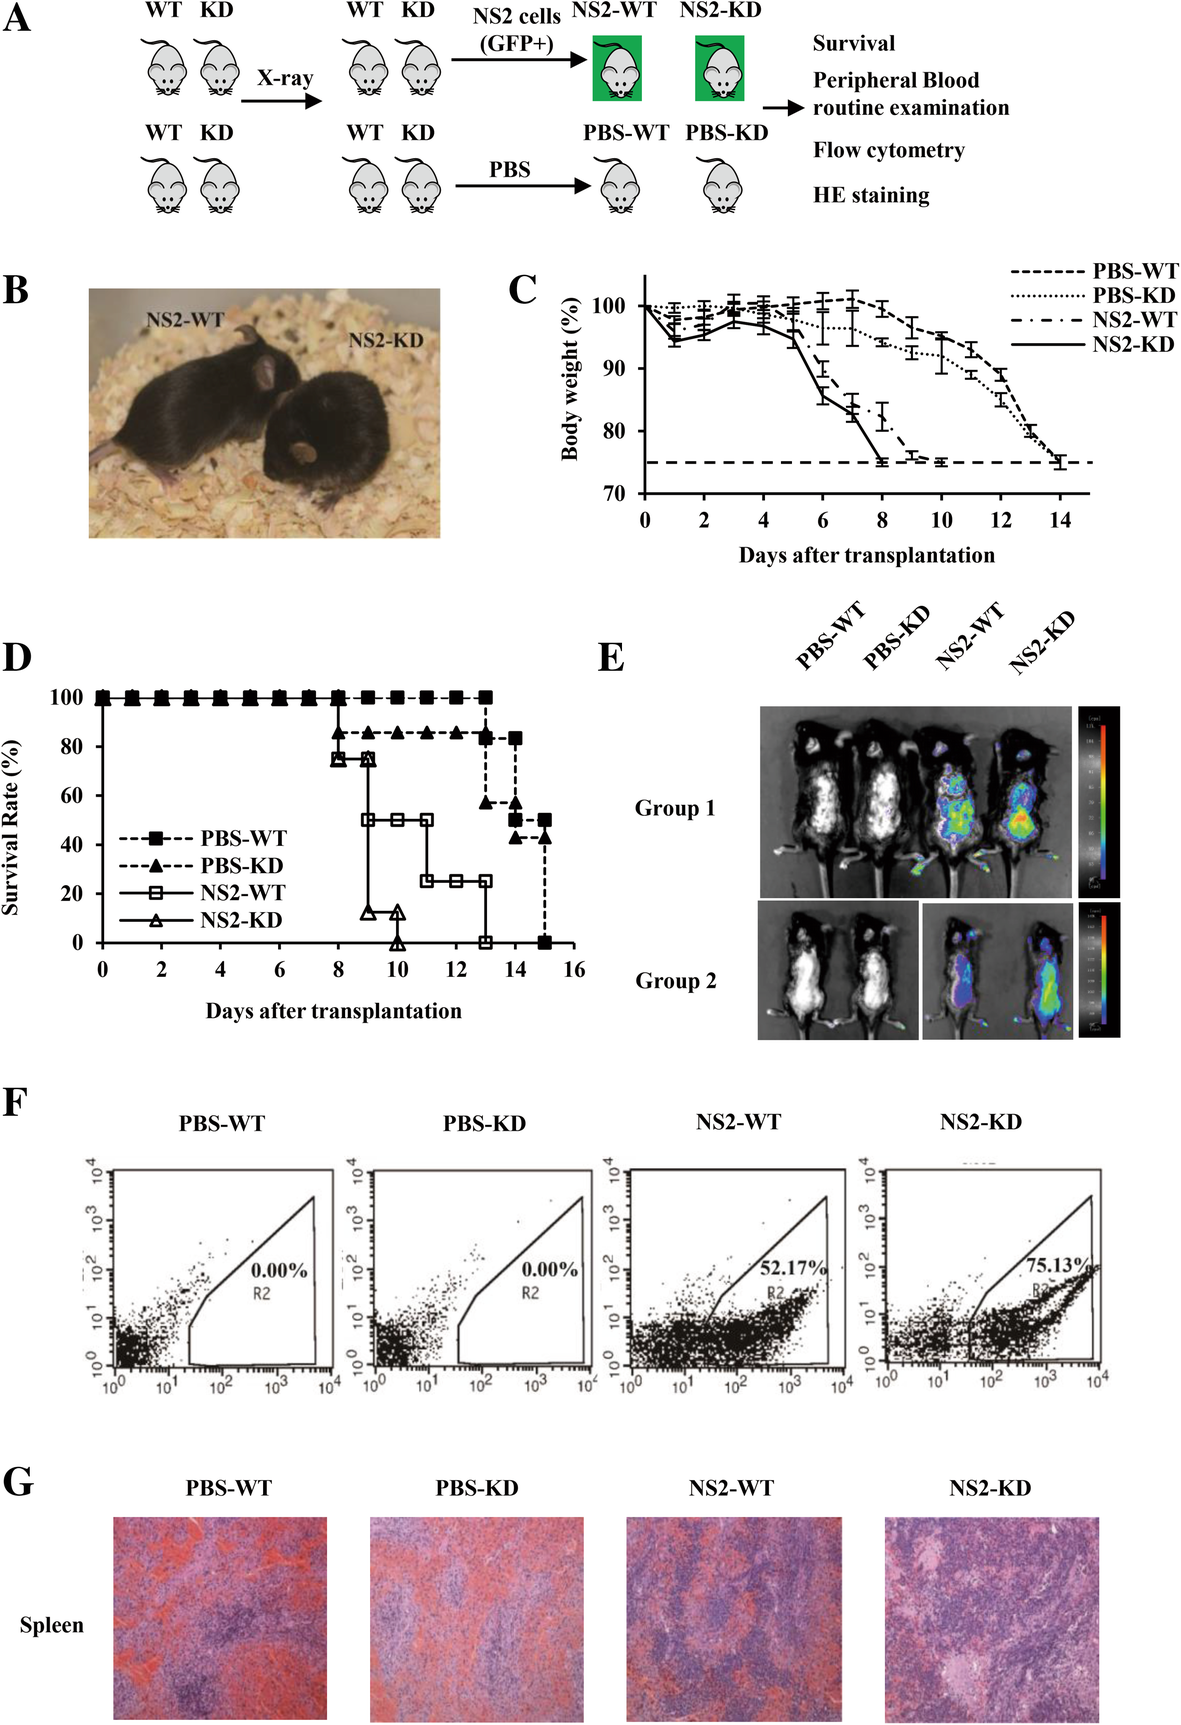 Novel lncRNA-IUR suppresses Bcr-Abl-induced tumorigenesis 